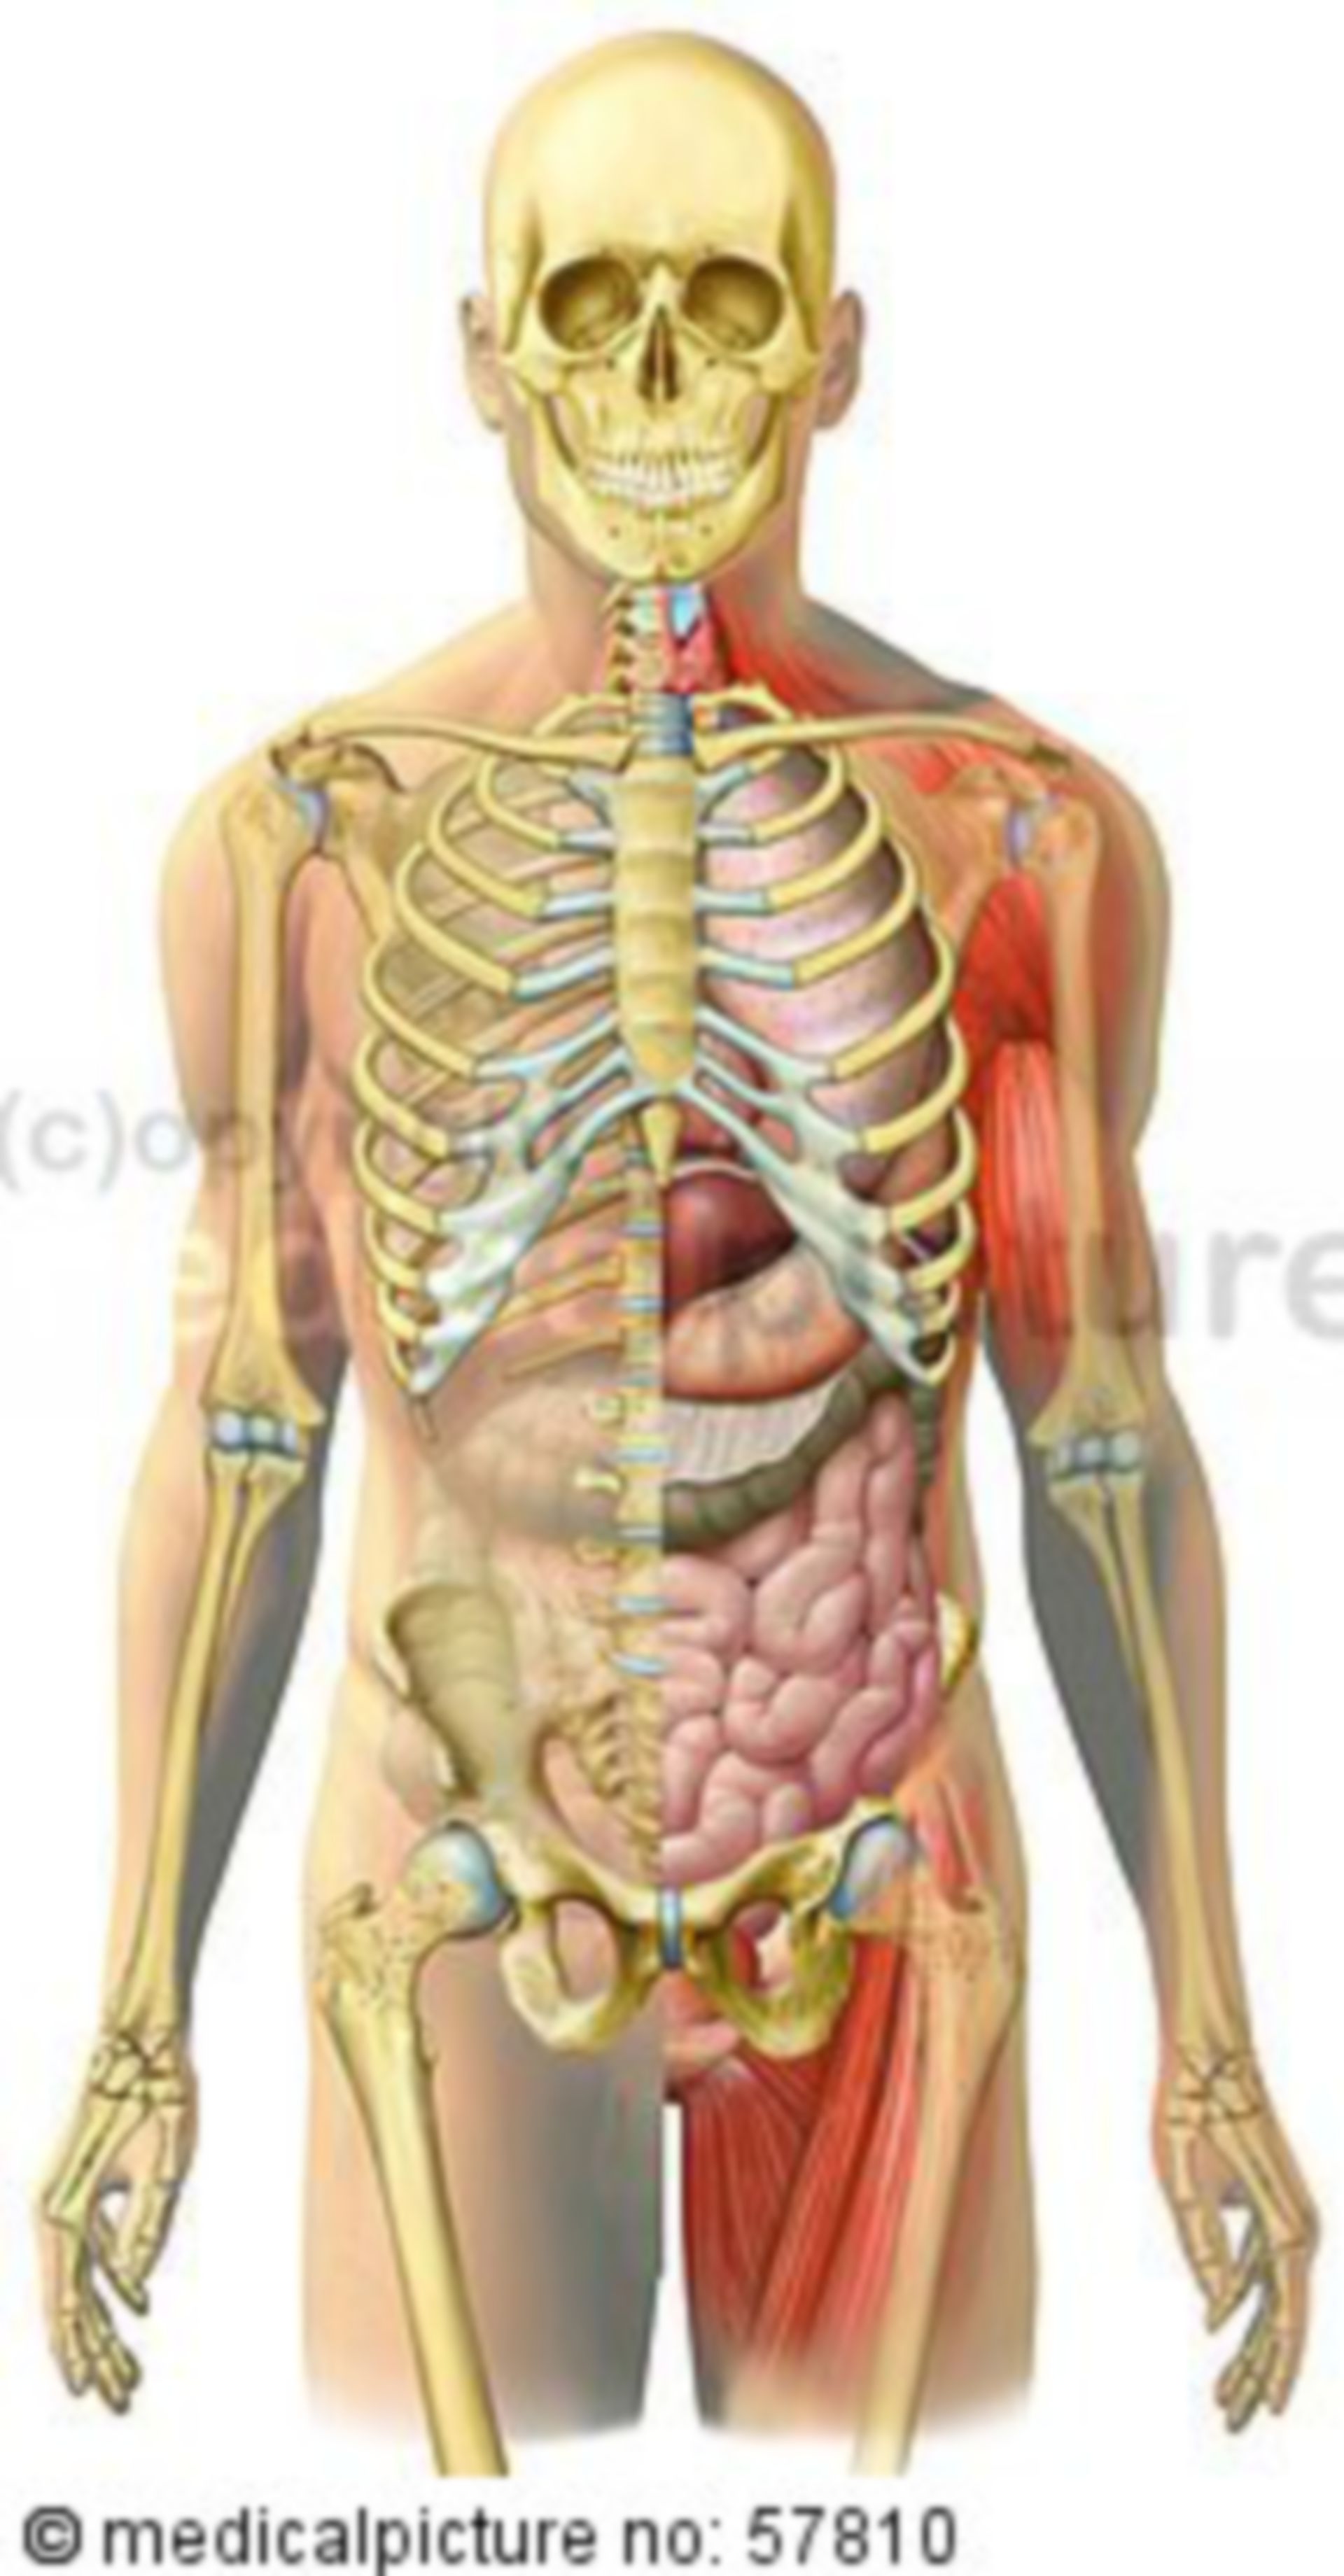 Anatomical illustrations - skeleton with intestines